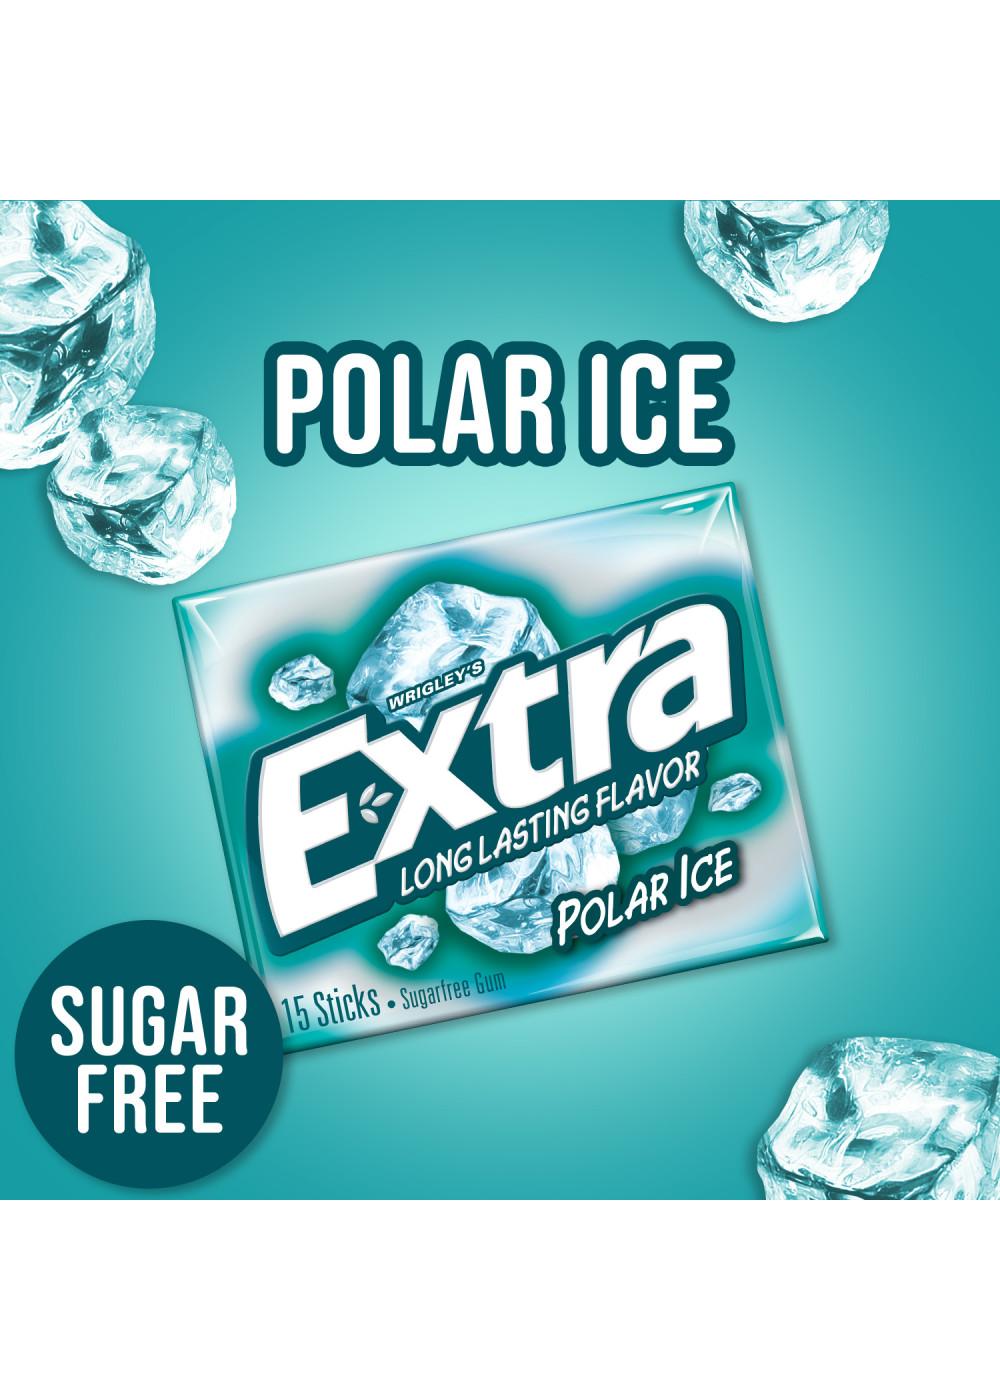 Extra Polar Ice Sugar Free Gum; image 7 of 7